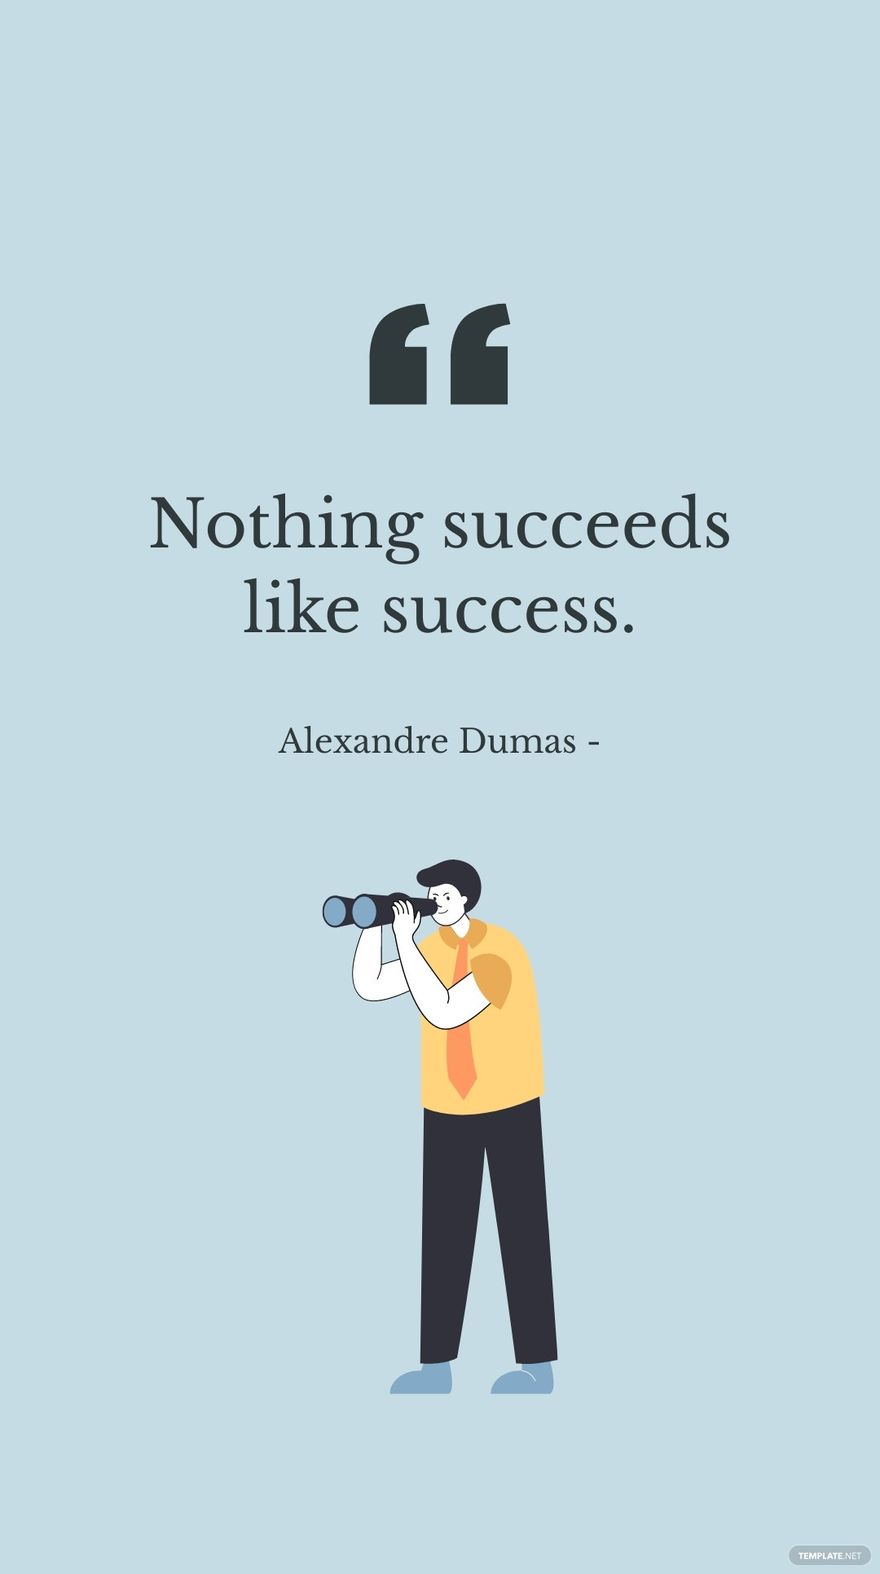 Alexandre Dumas - Nothing succeeds like success.